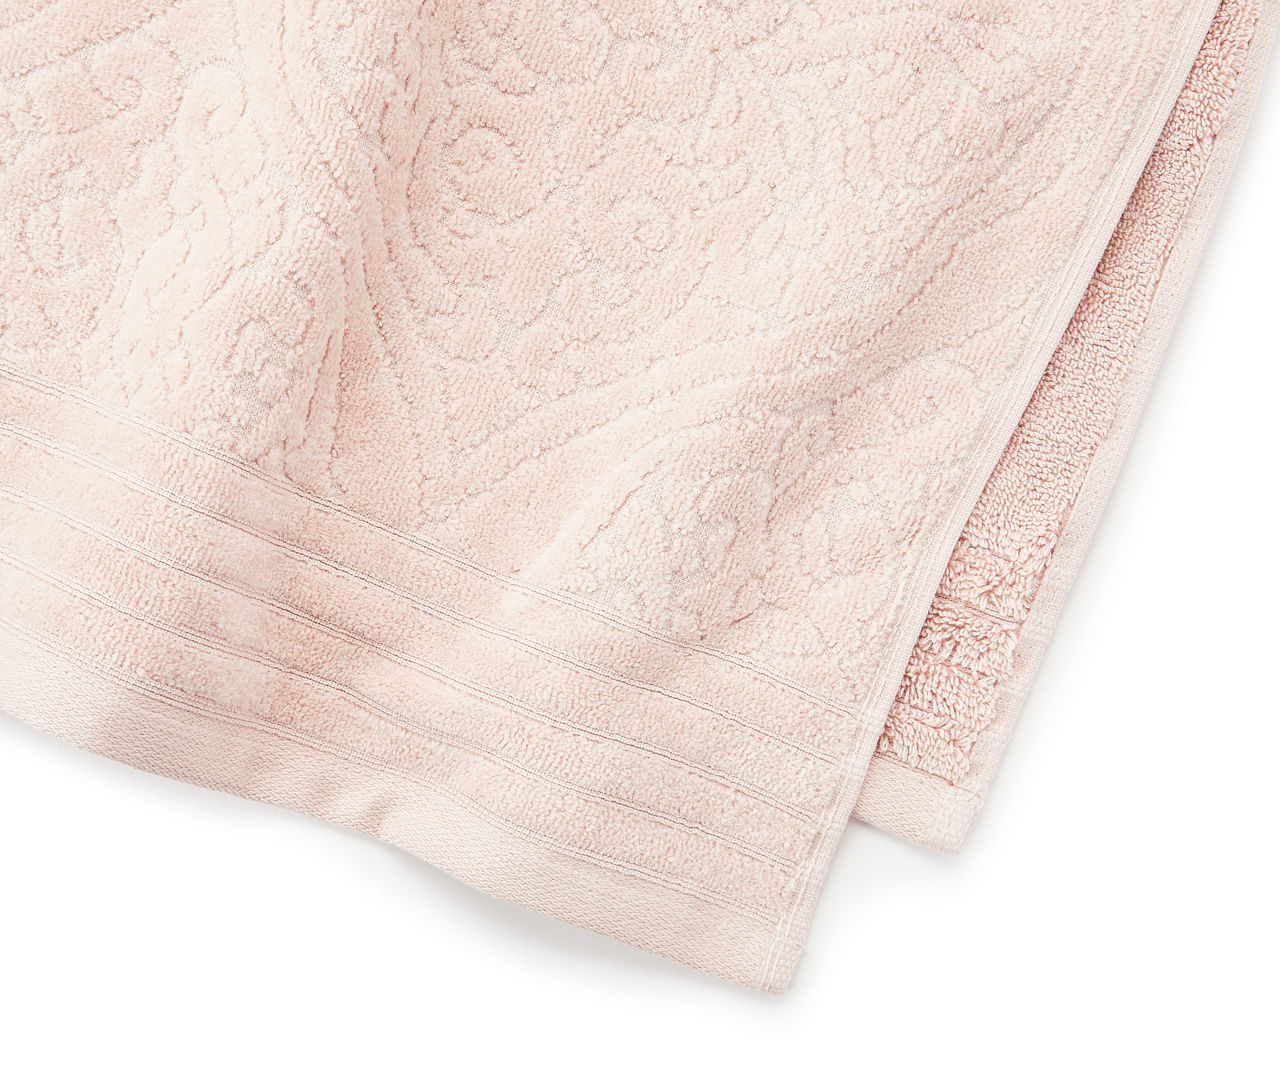 Z&H Pink & Yellow Stripe Cotton Bath Towel Set, Best Price and Reviews